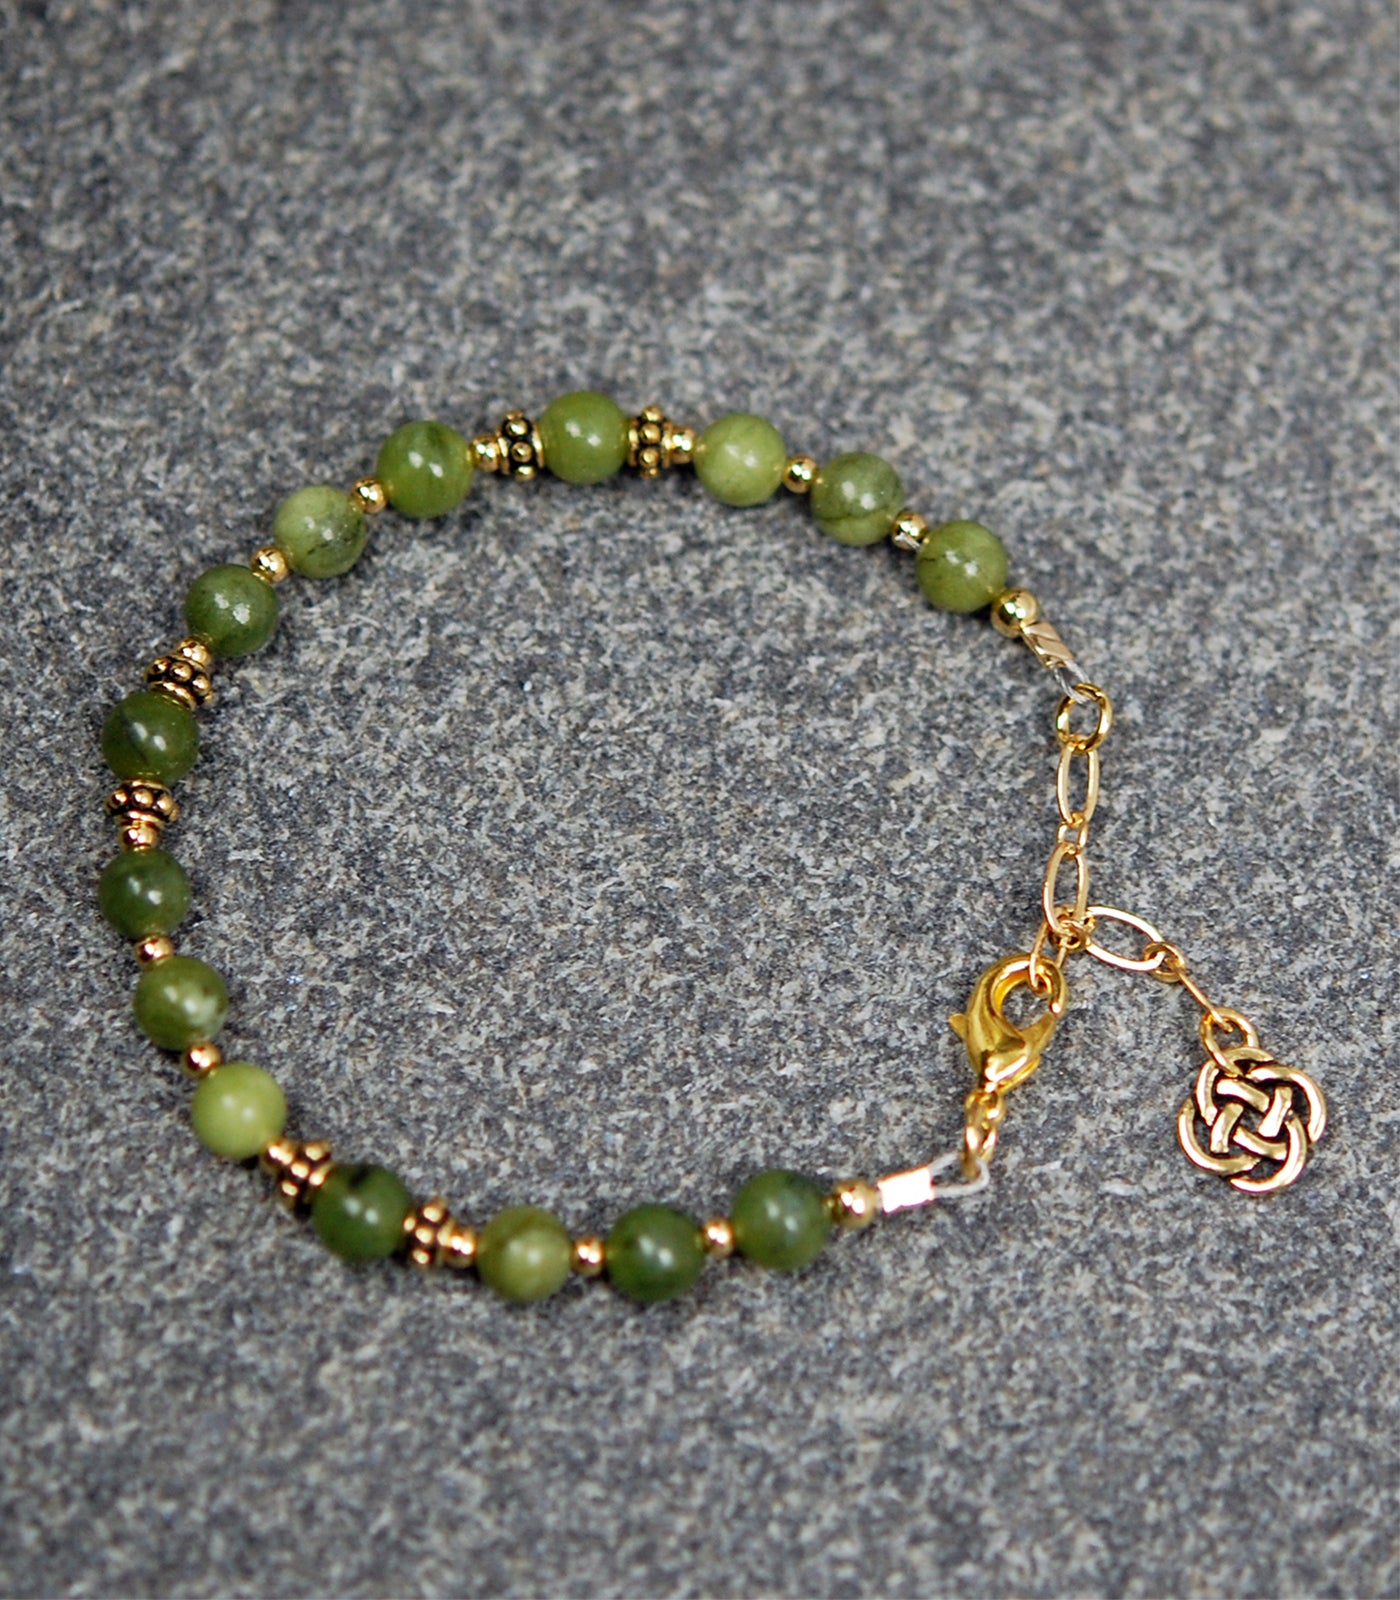 Connemara Marble Bracelet with Delicate Antiqued Gold Celtic Knot